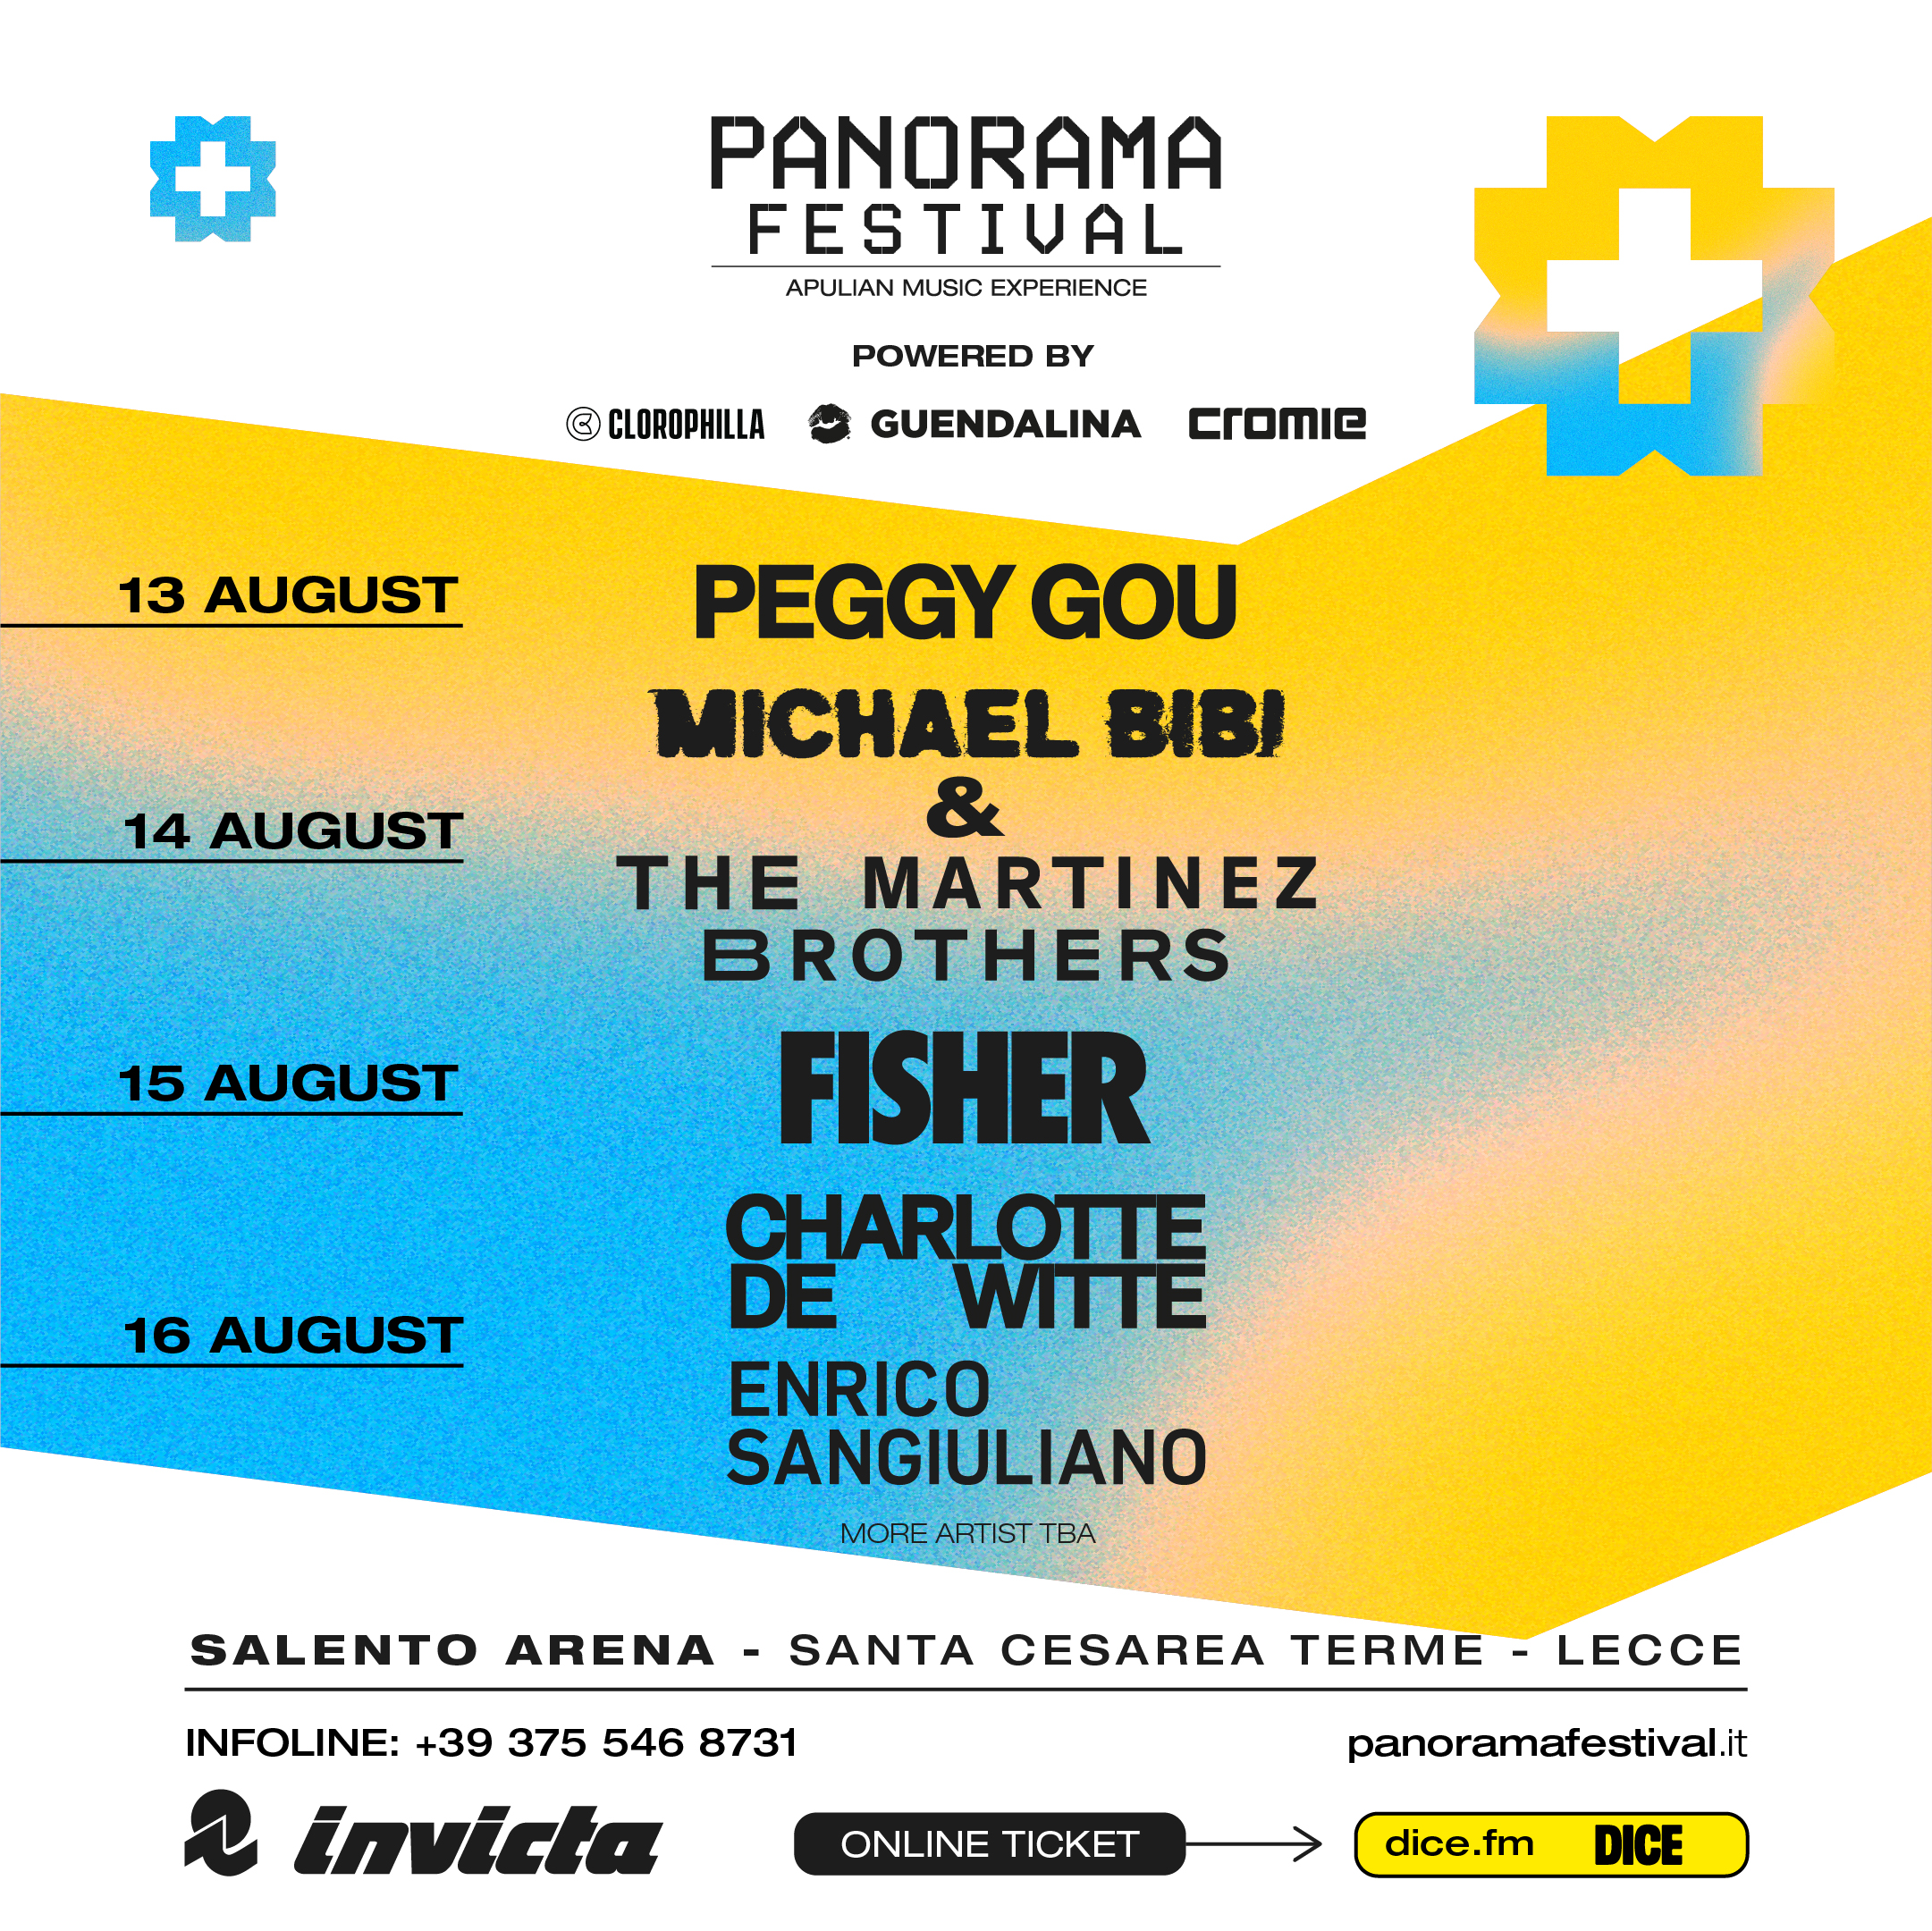 Panorama Festival at TBA - Salento Arena, South